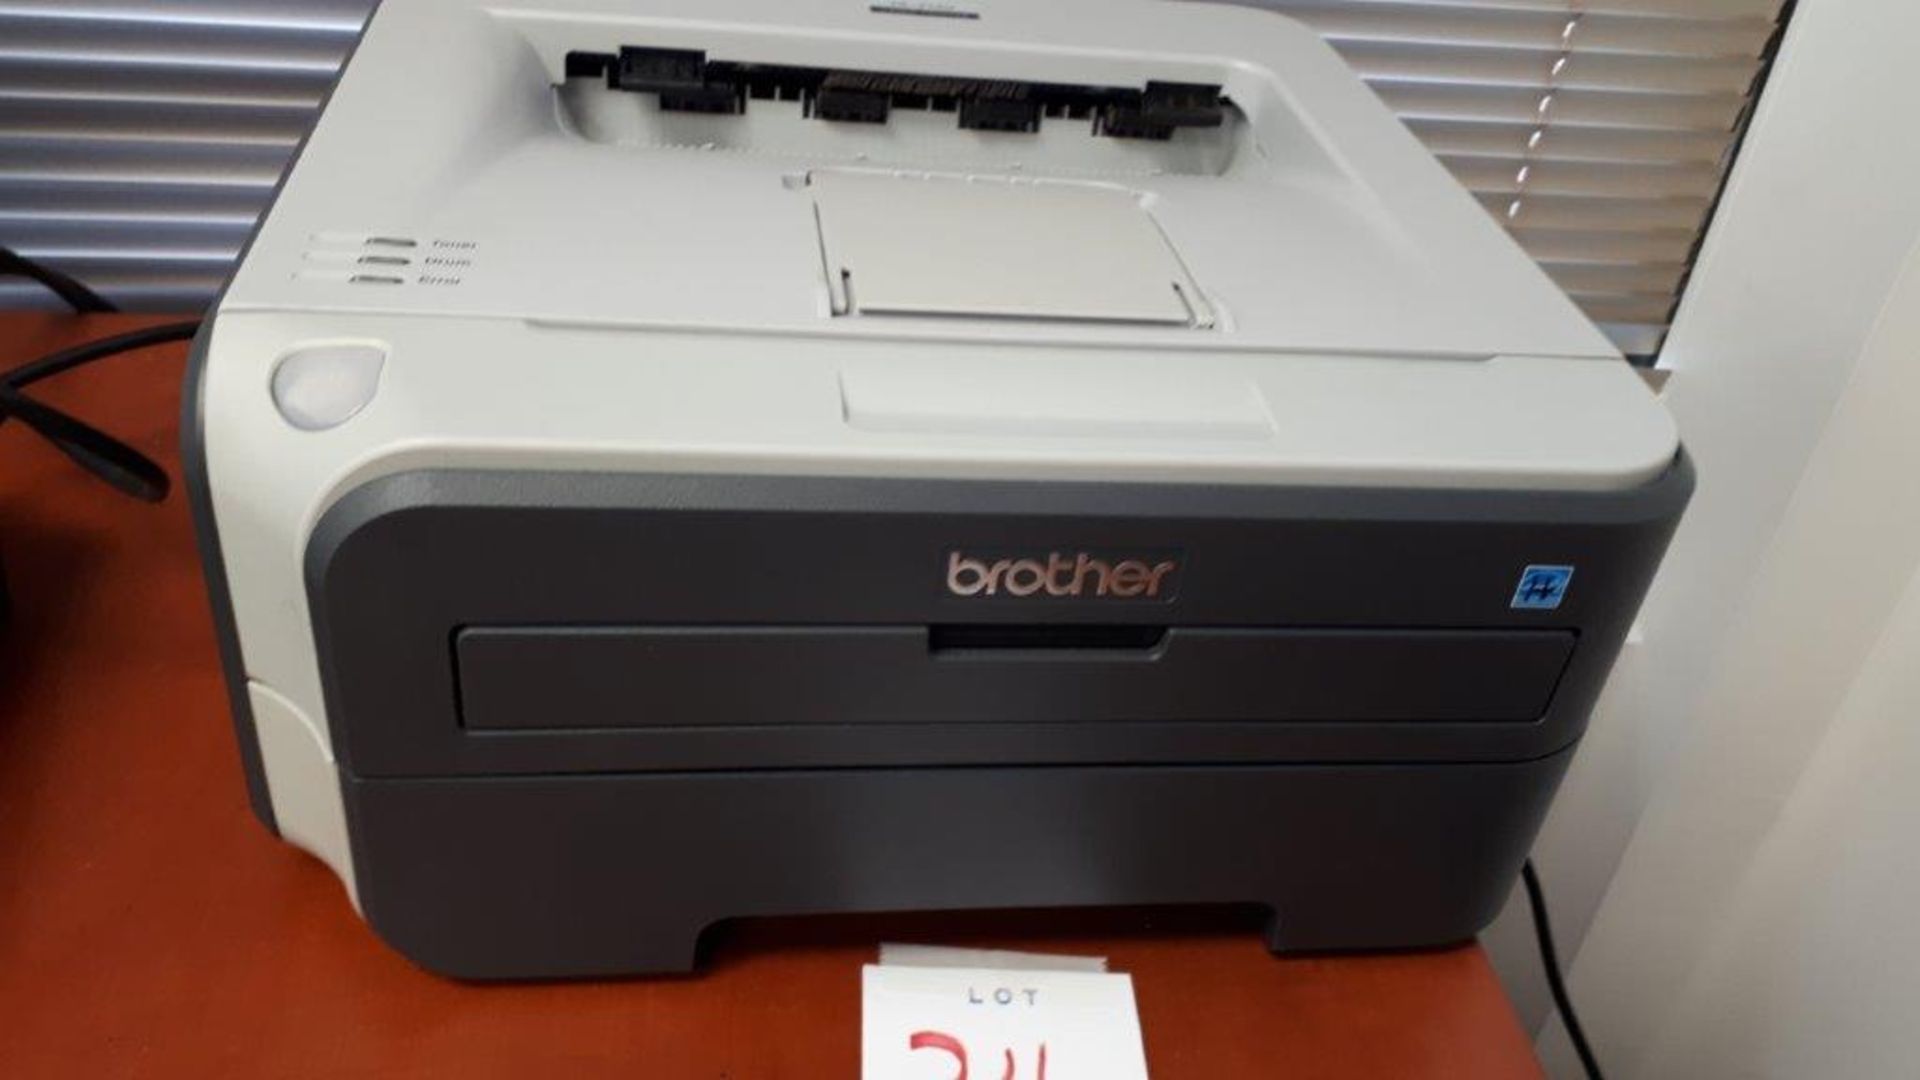 Brother printer HL-2140 - Image 2 of 3